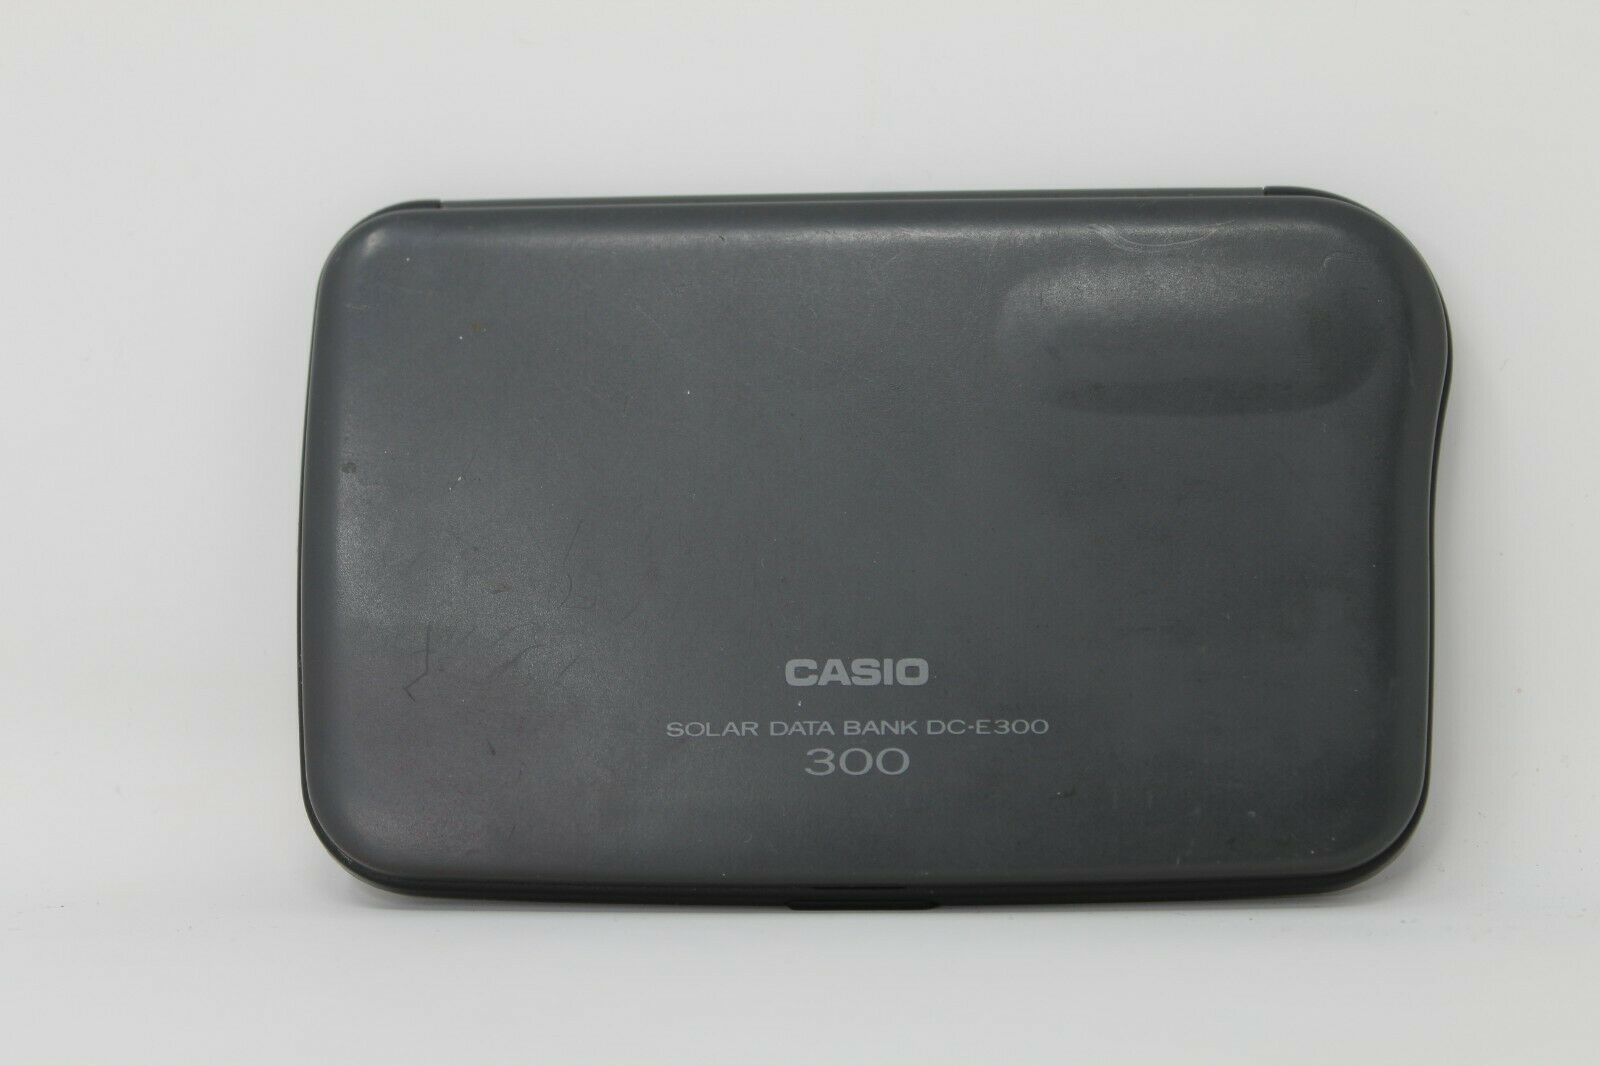 Casio Solar Data Bank 300 Black Electronic Organizer Dc-e300 Tested Works!